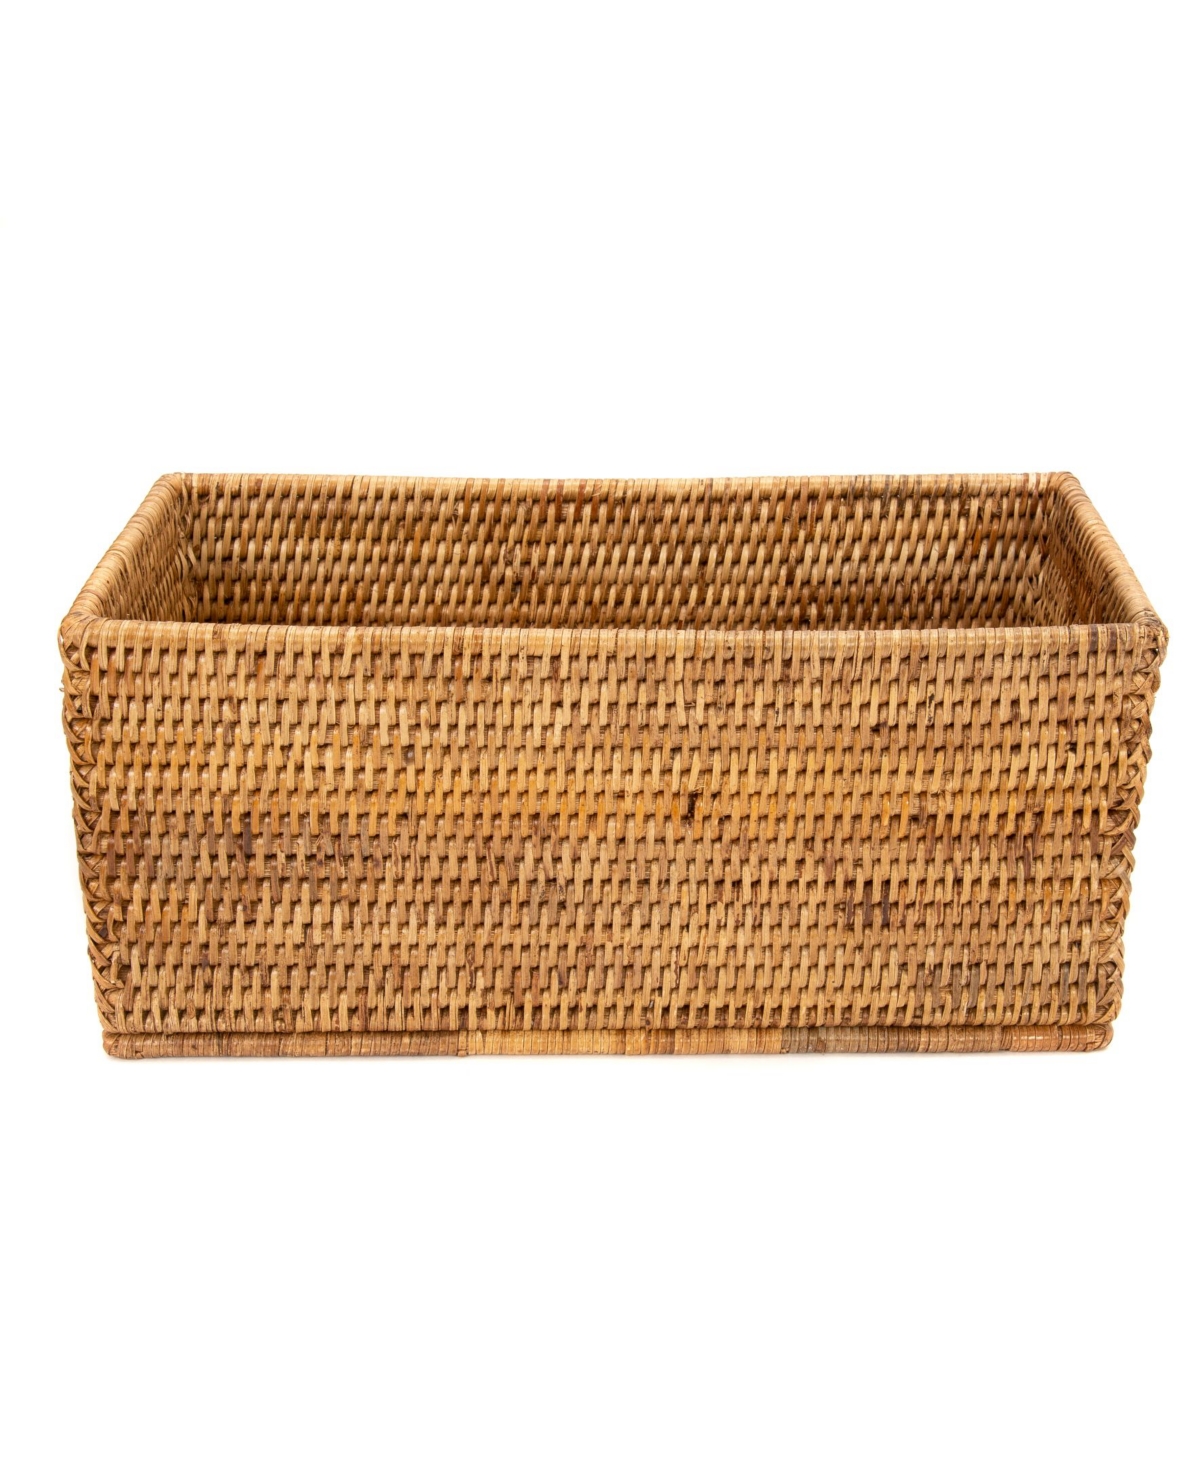 Shop Artifacts Trading Company Artifacts Rattan Rectangular Basket In Honey Brown